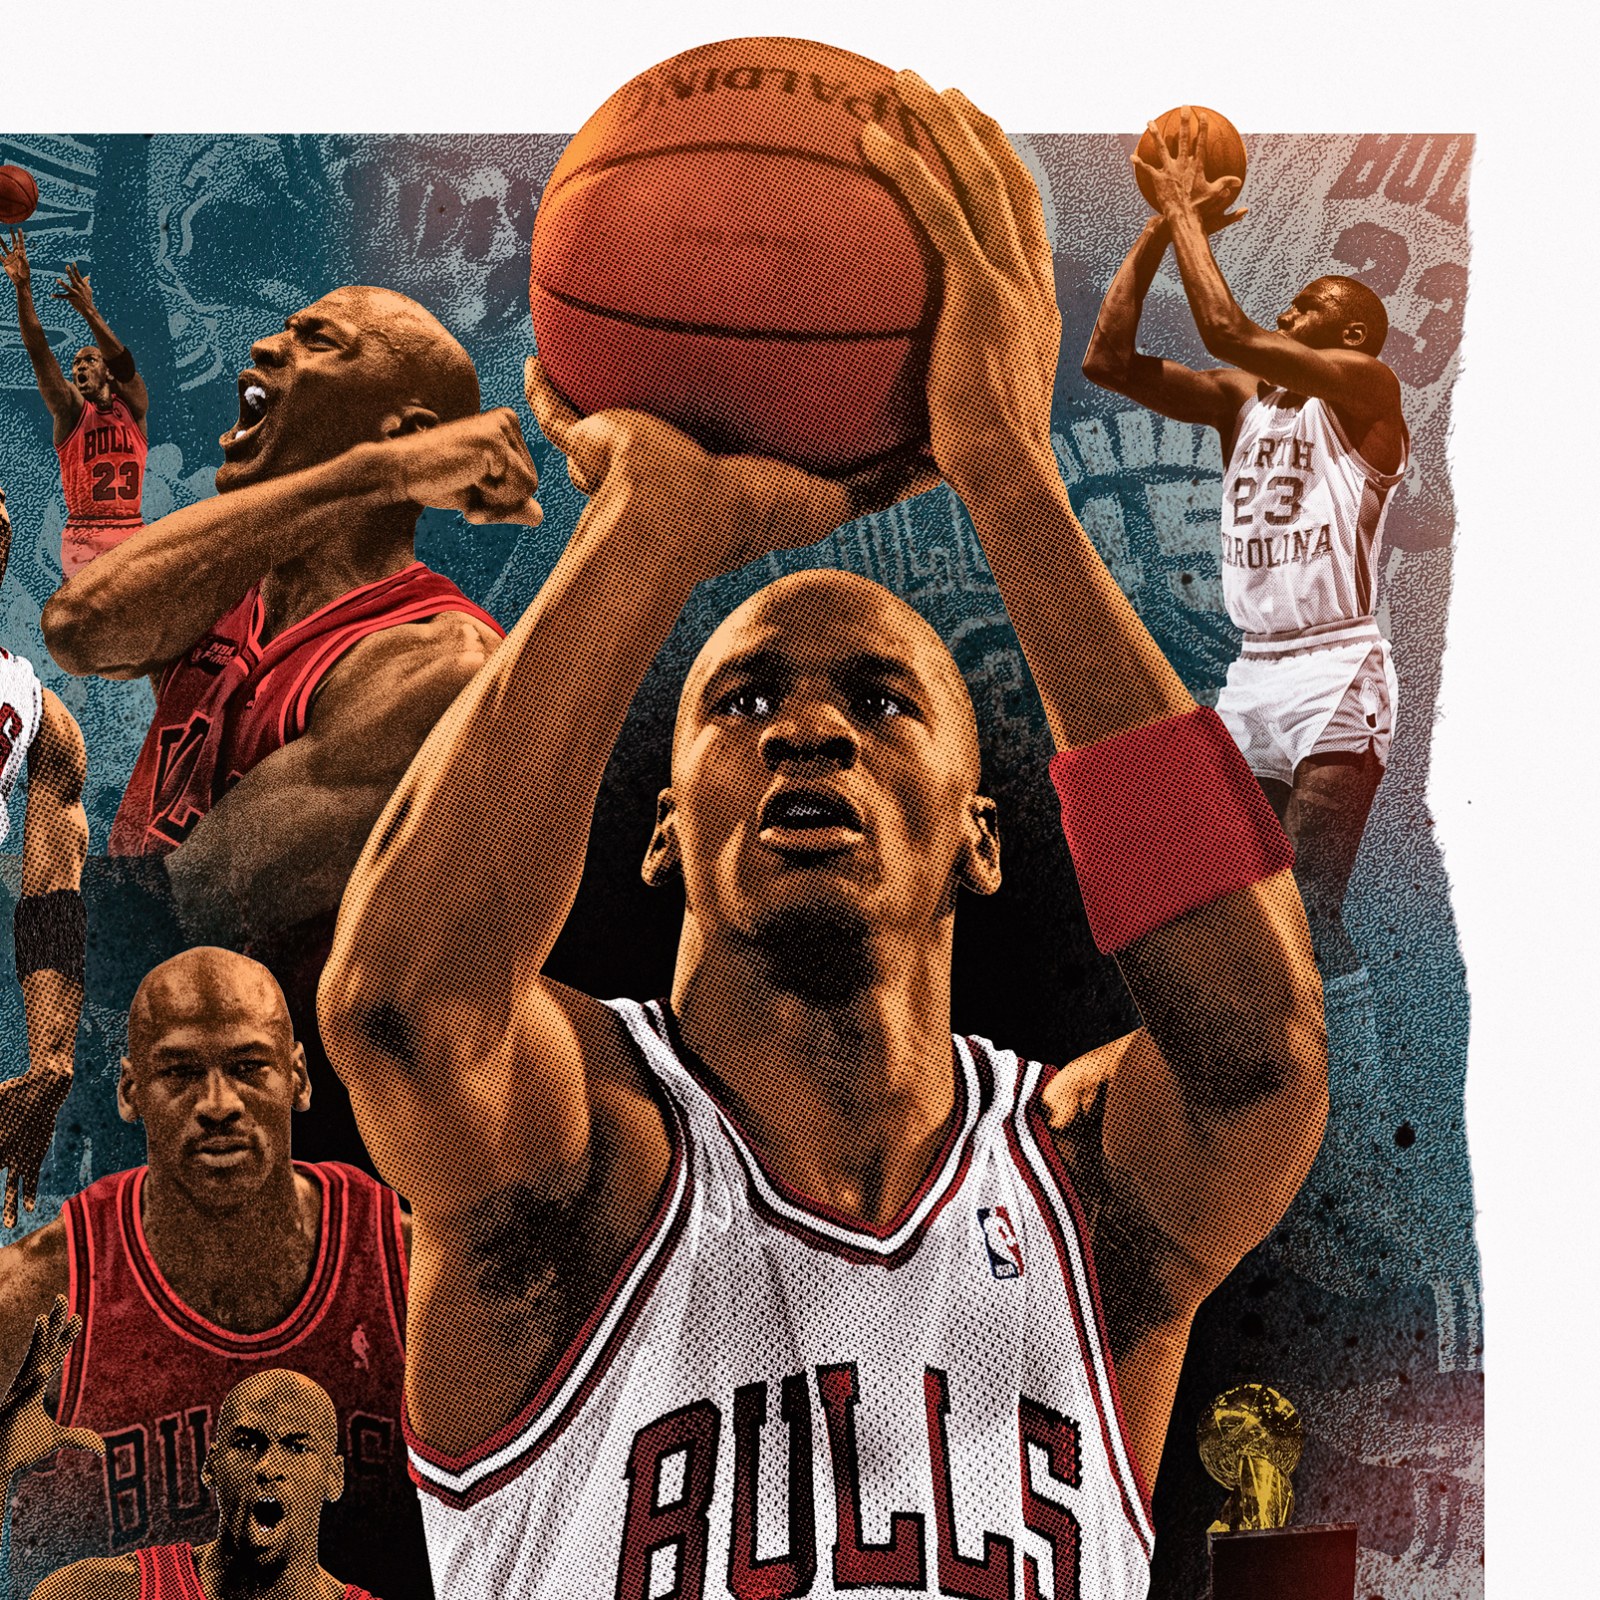 ESPN Michael Jordan documentary: 'The Last Dance' highlights - Los